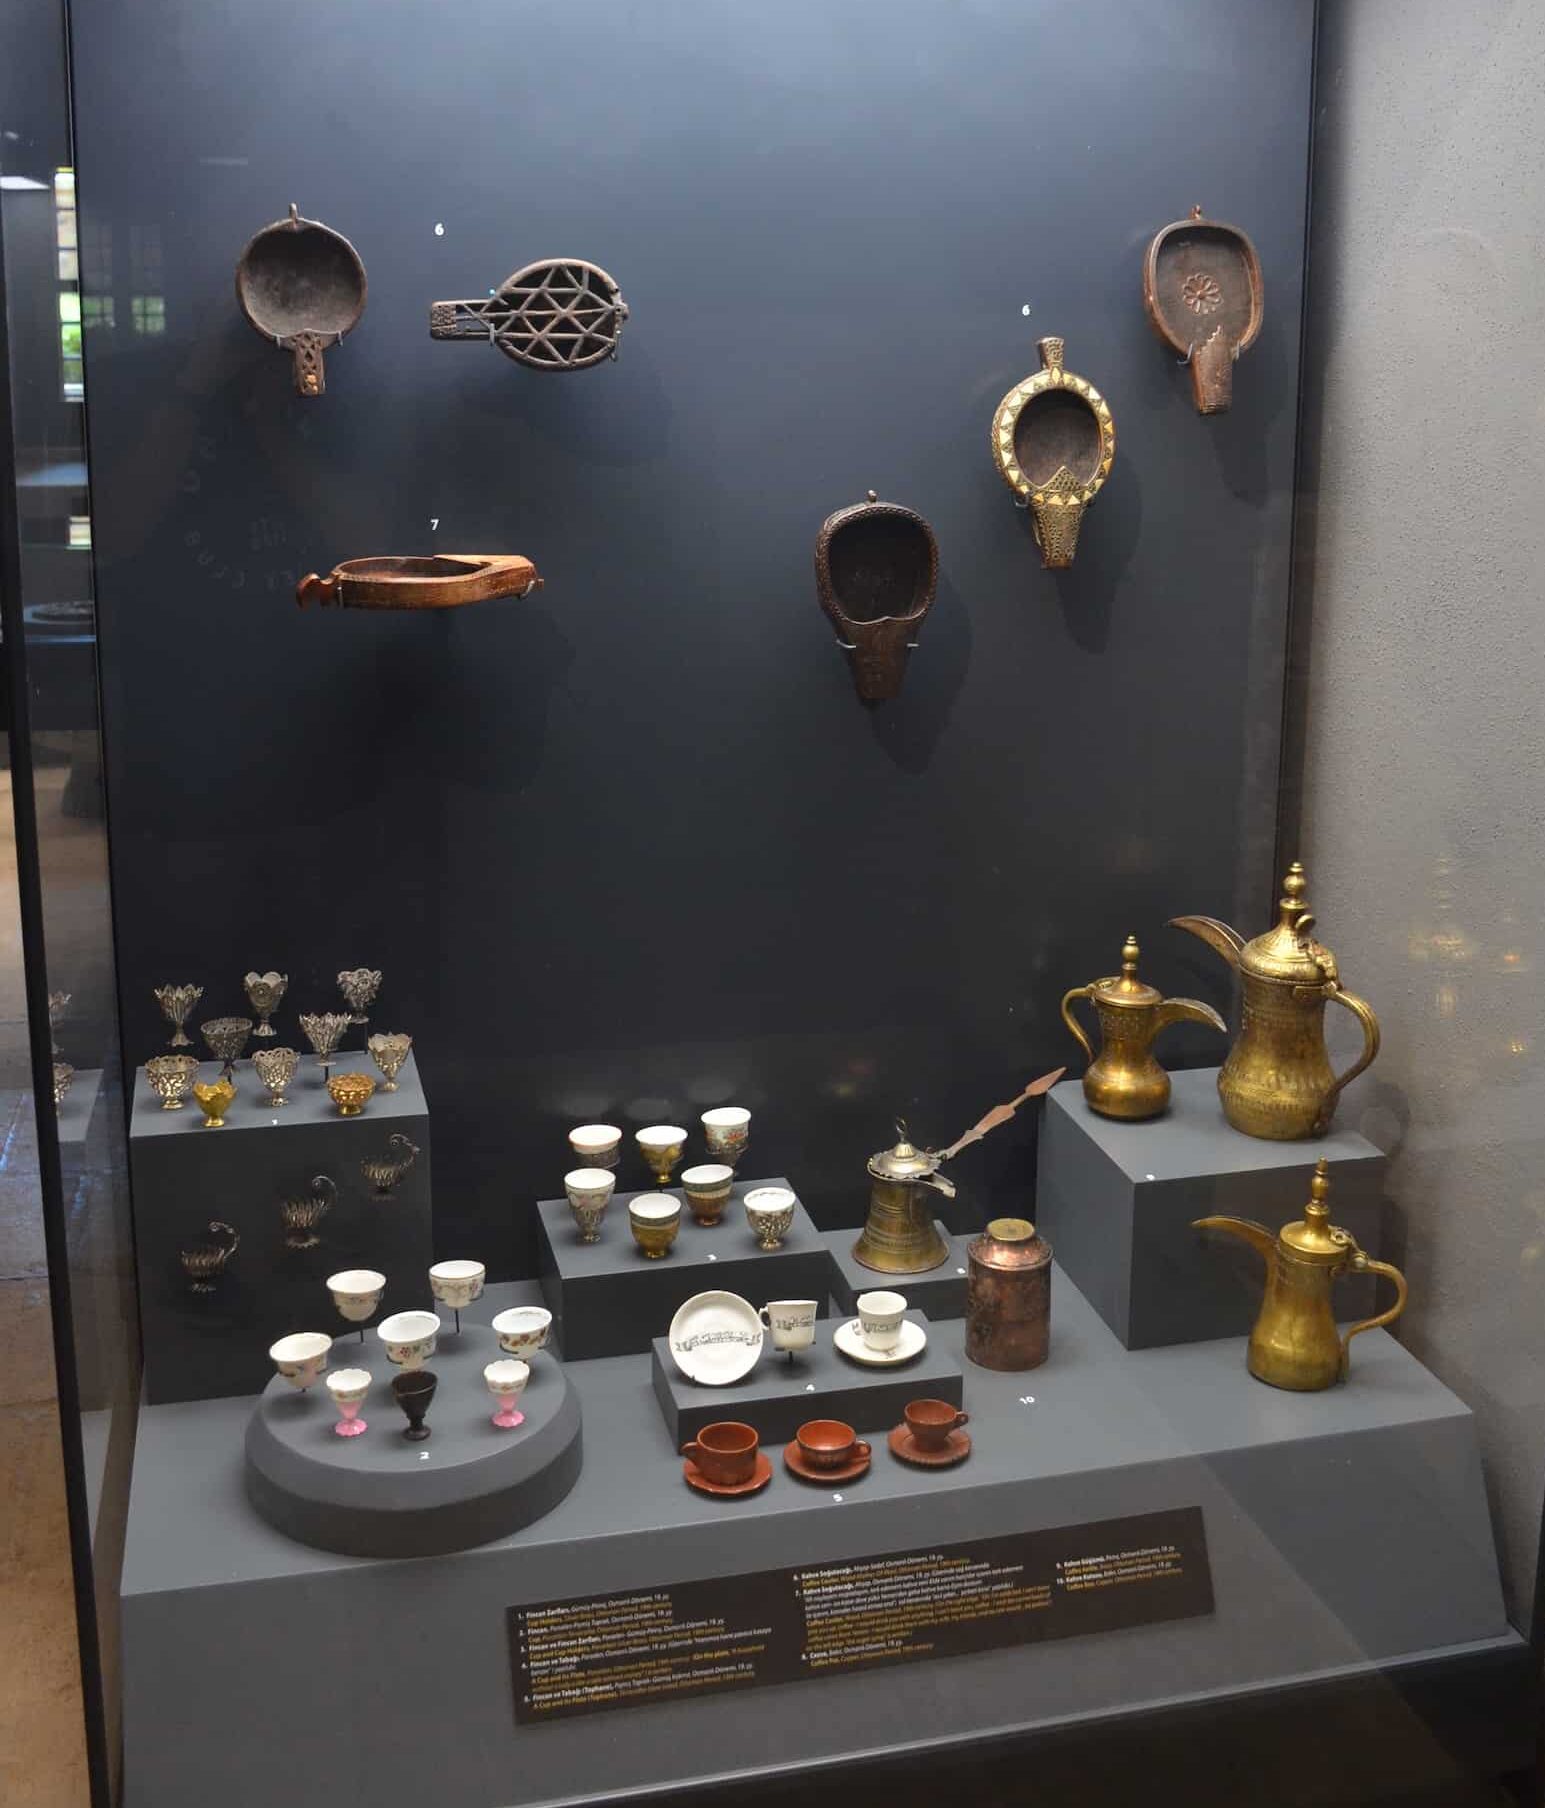 19th century Ottoman coffee items